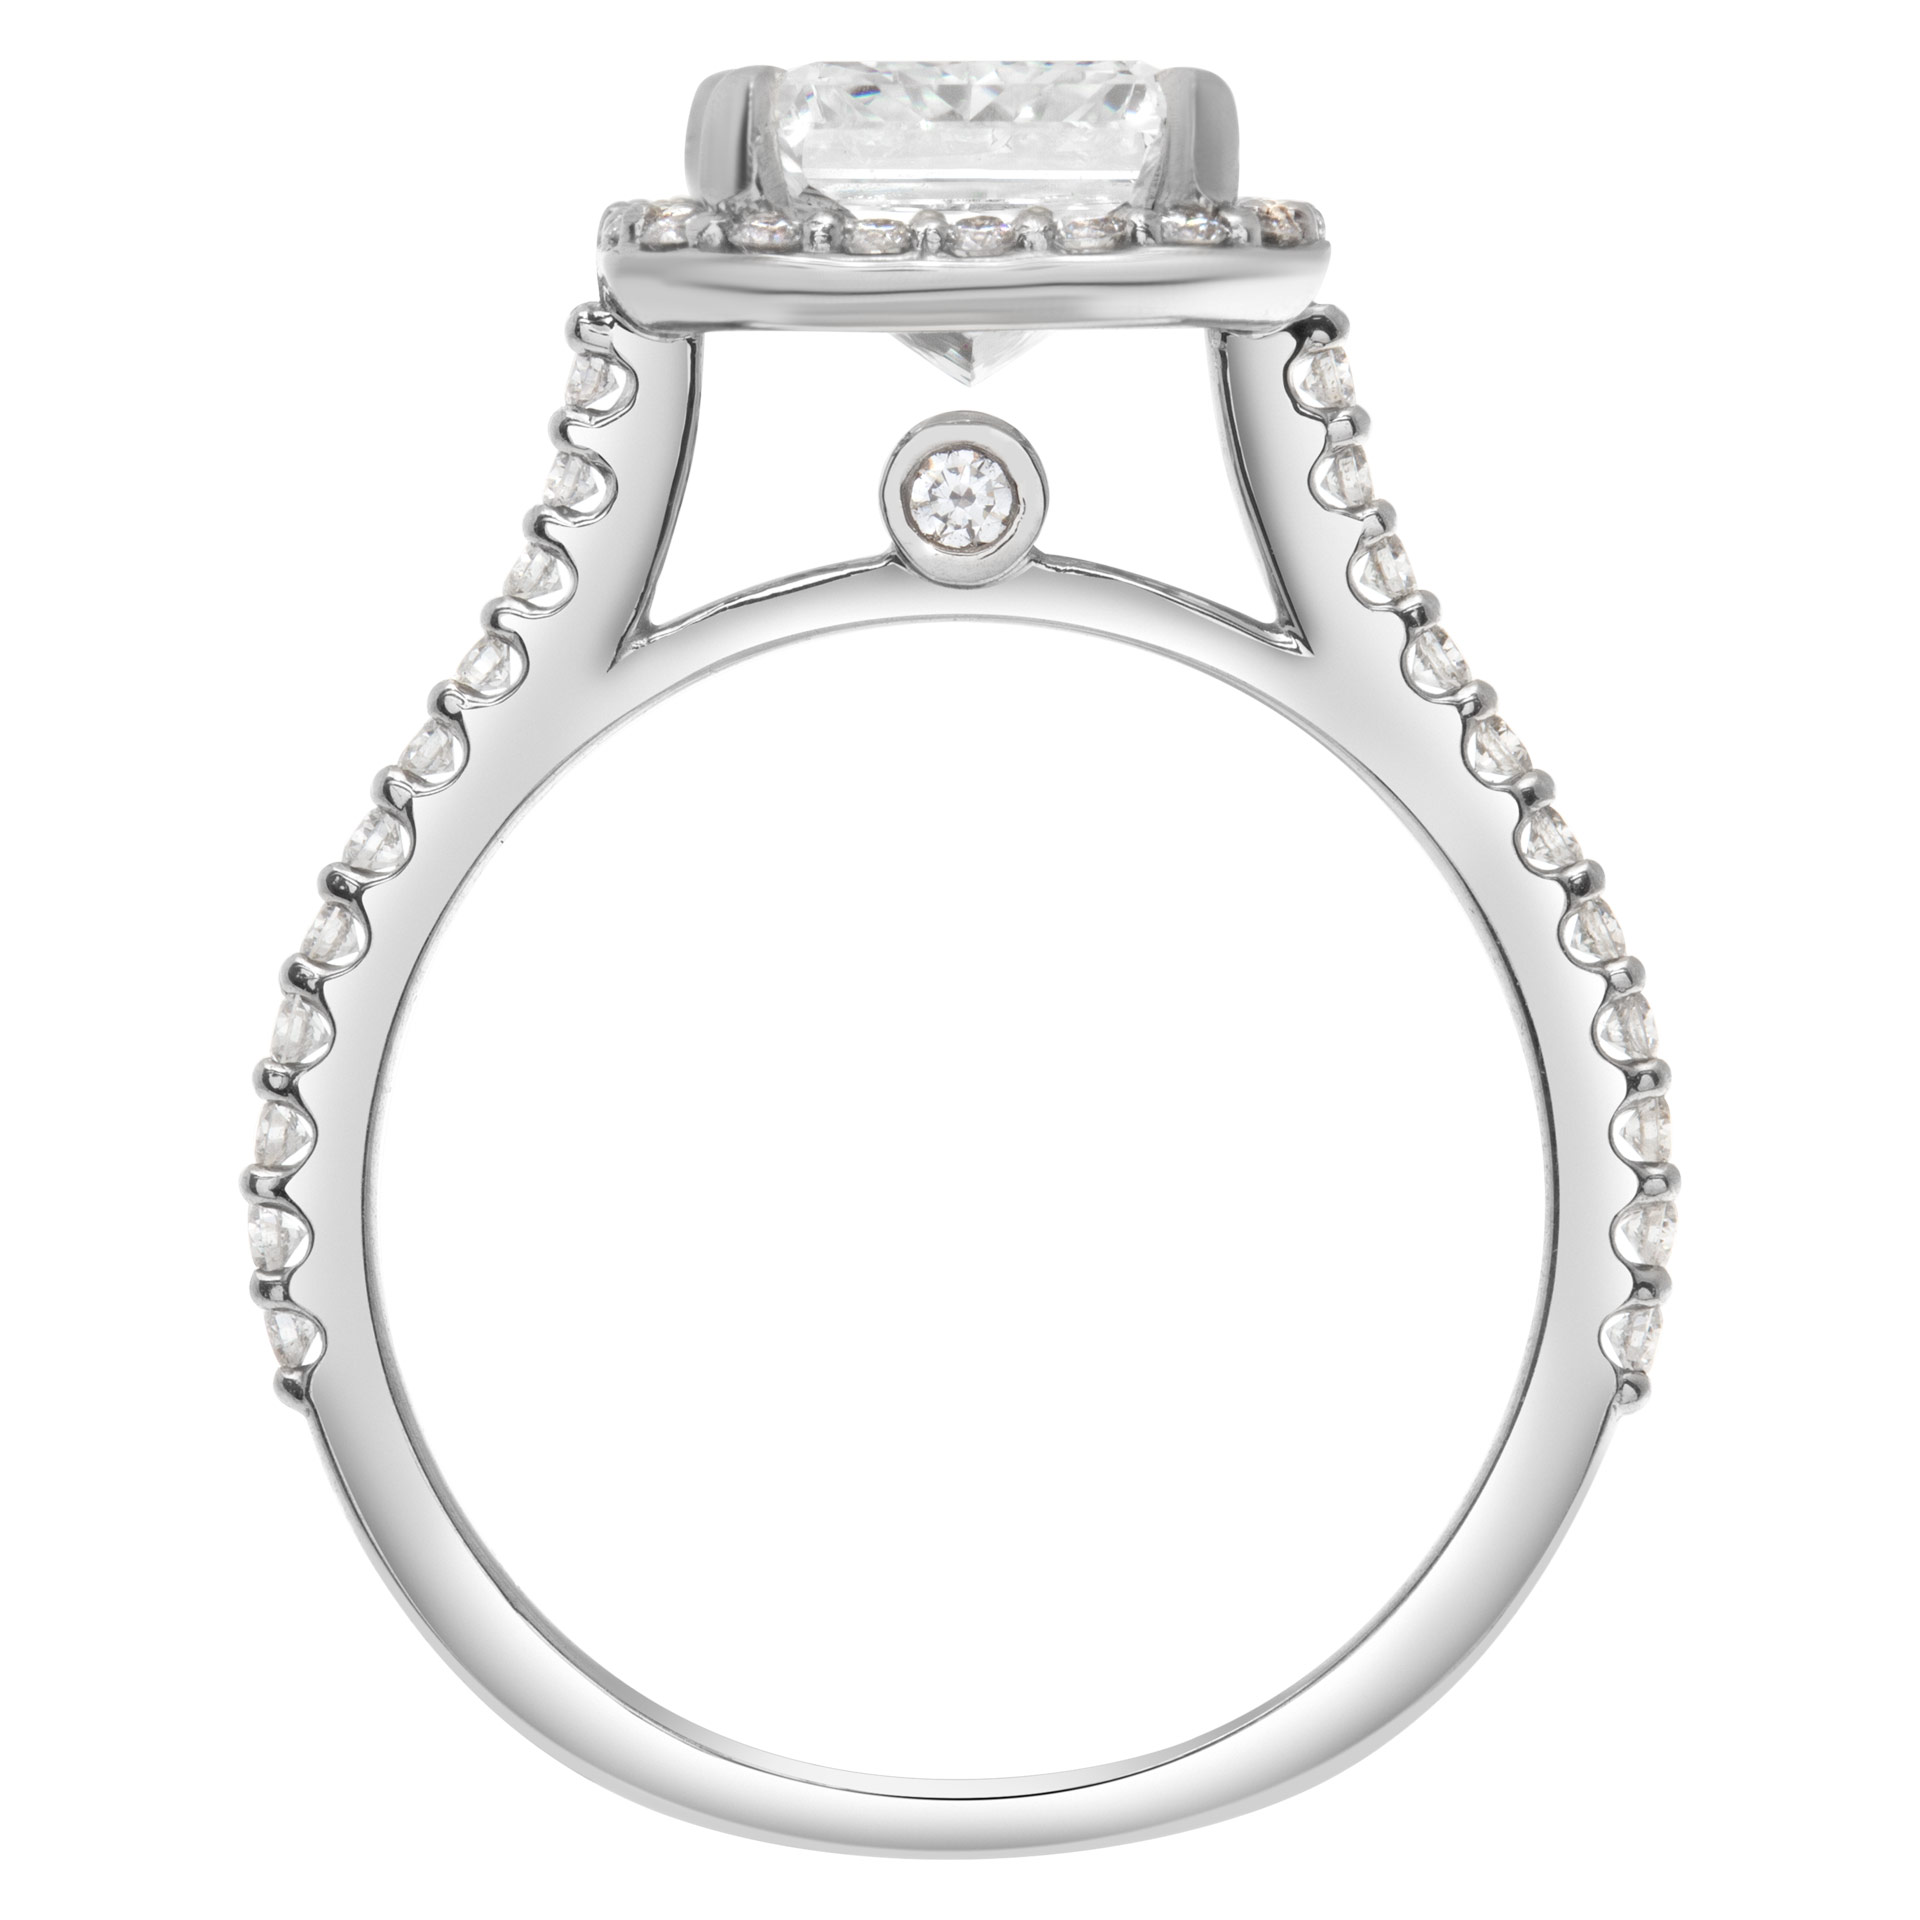 GIA certified cut- cornered rectangular modified brilliant cut diamond 3.01 carat (I color, VS2 clarity image 4